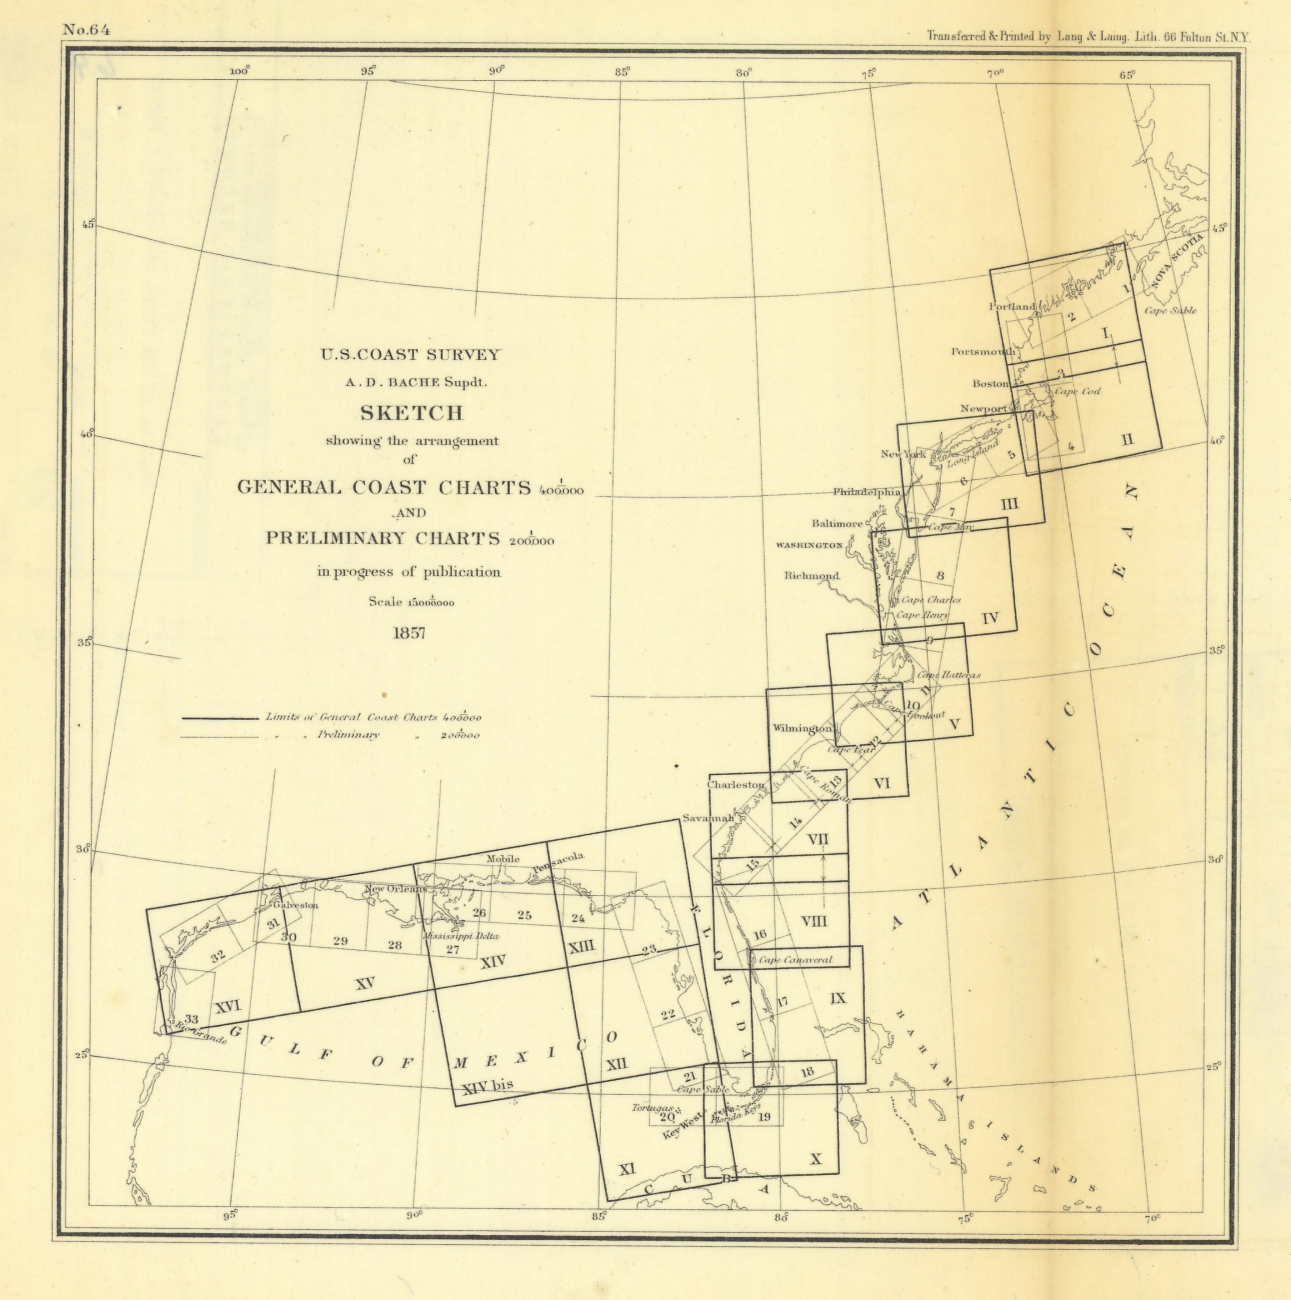 Annual Report 1857